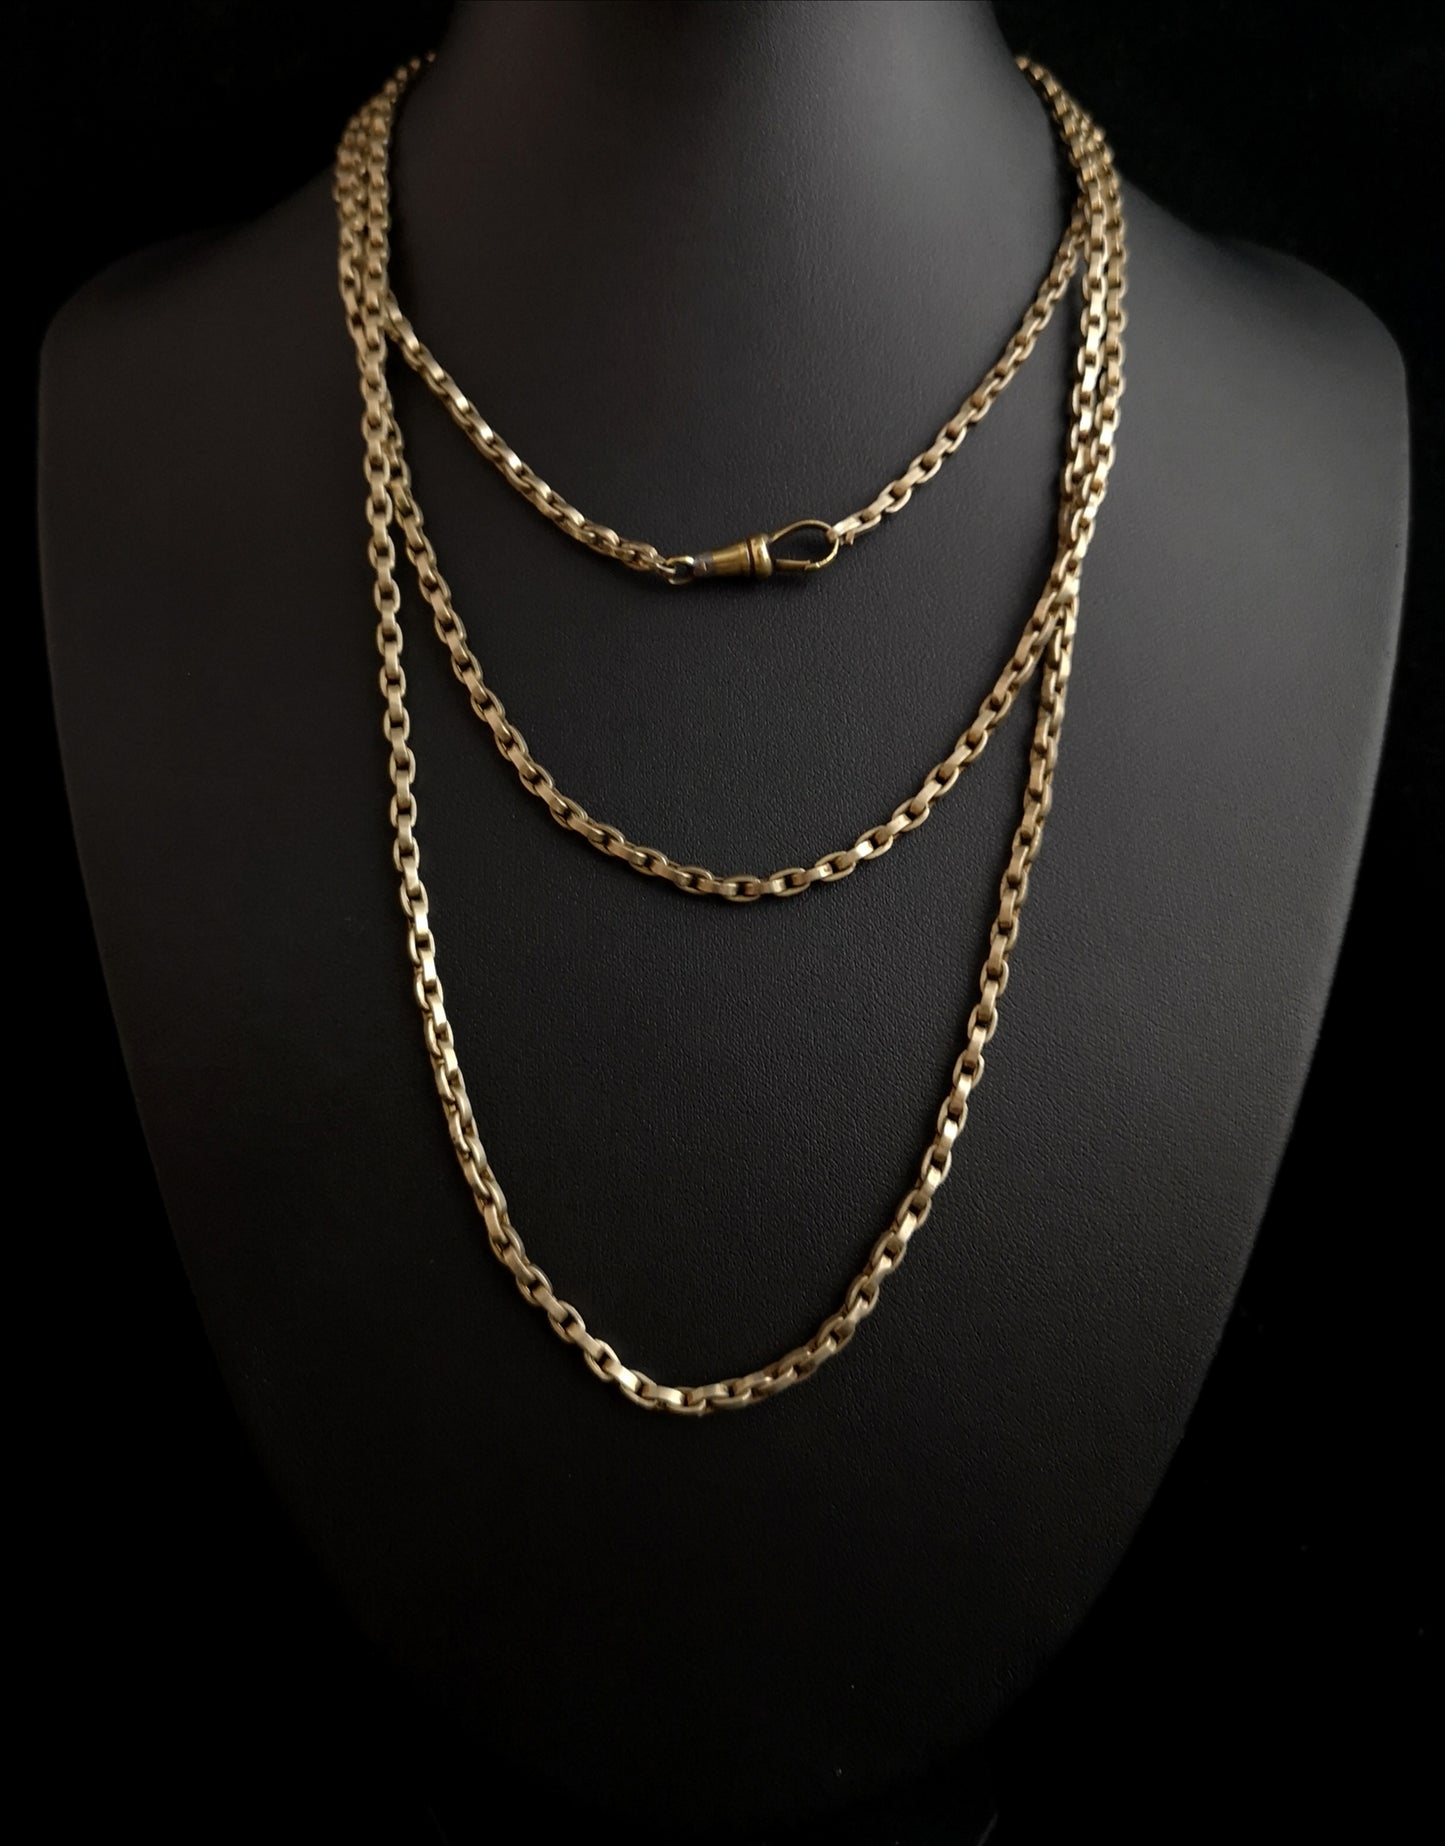 Antique longuard chain, Victorian muff chain necklace